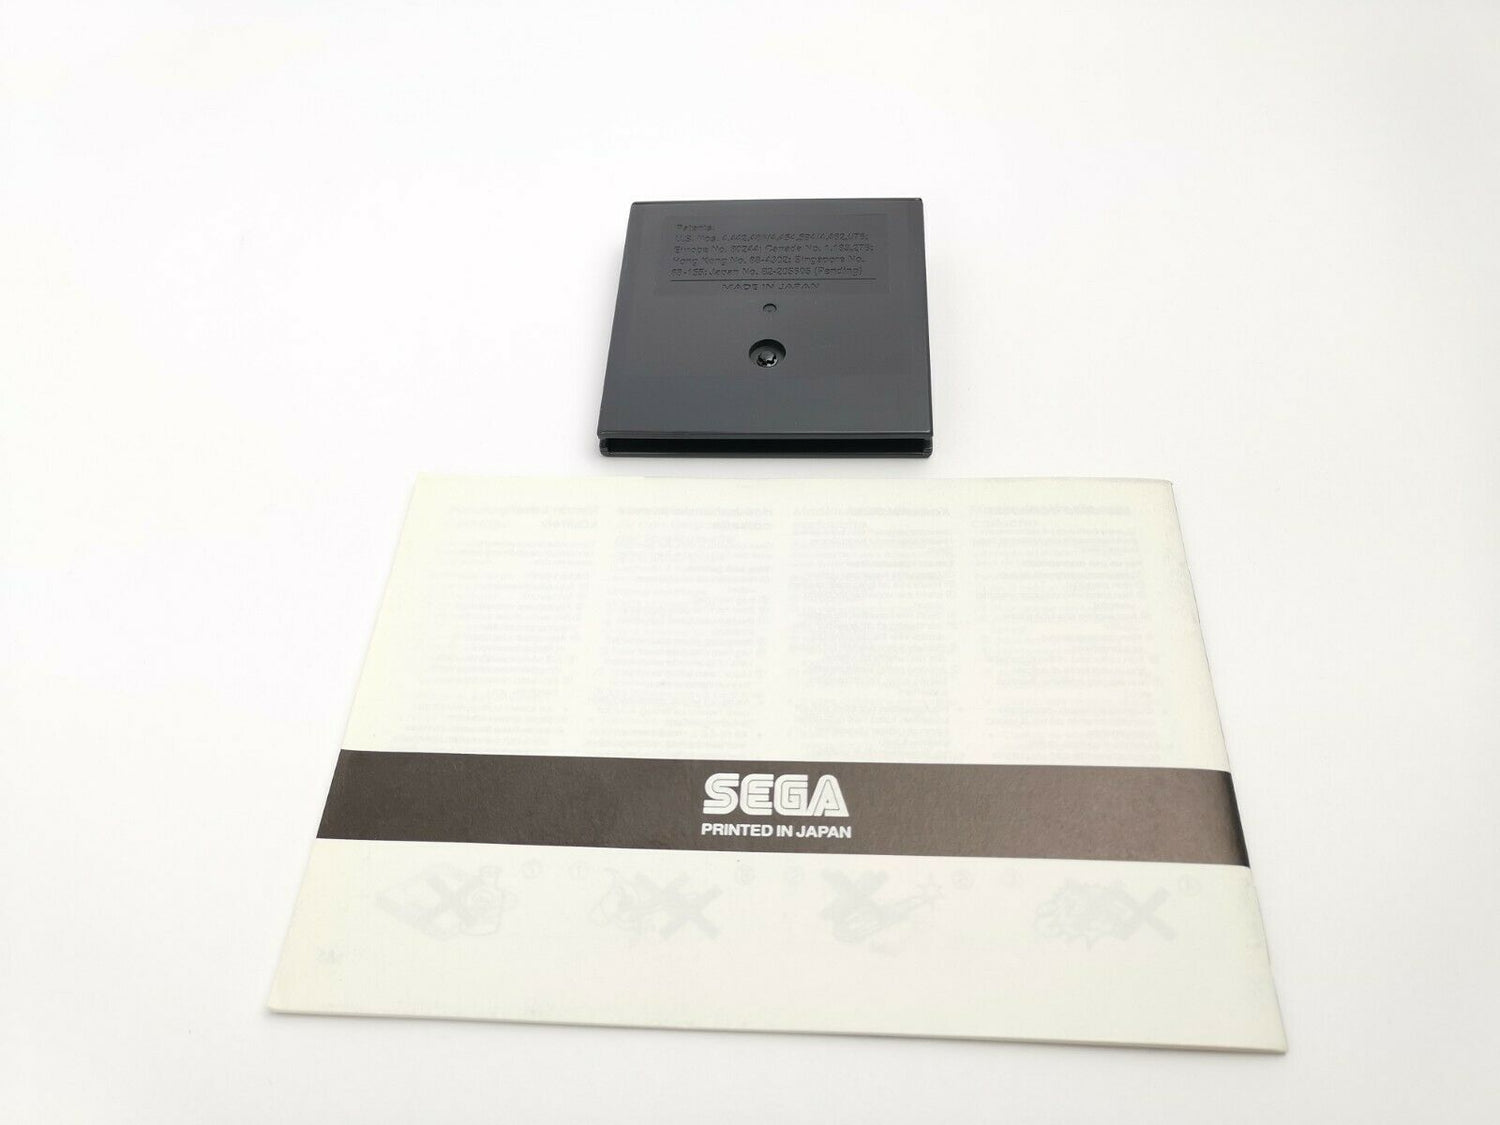 Sega Game Gear Spiel 